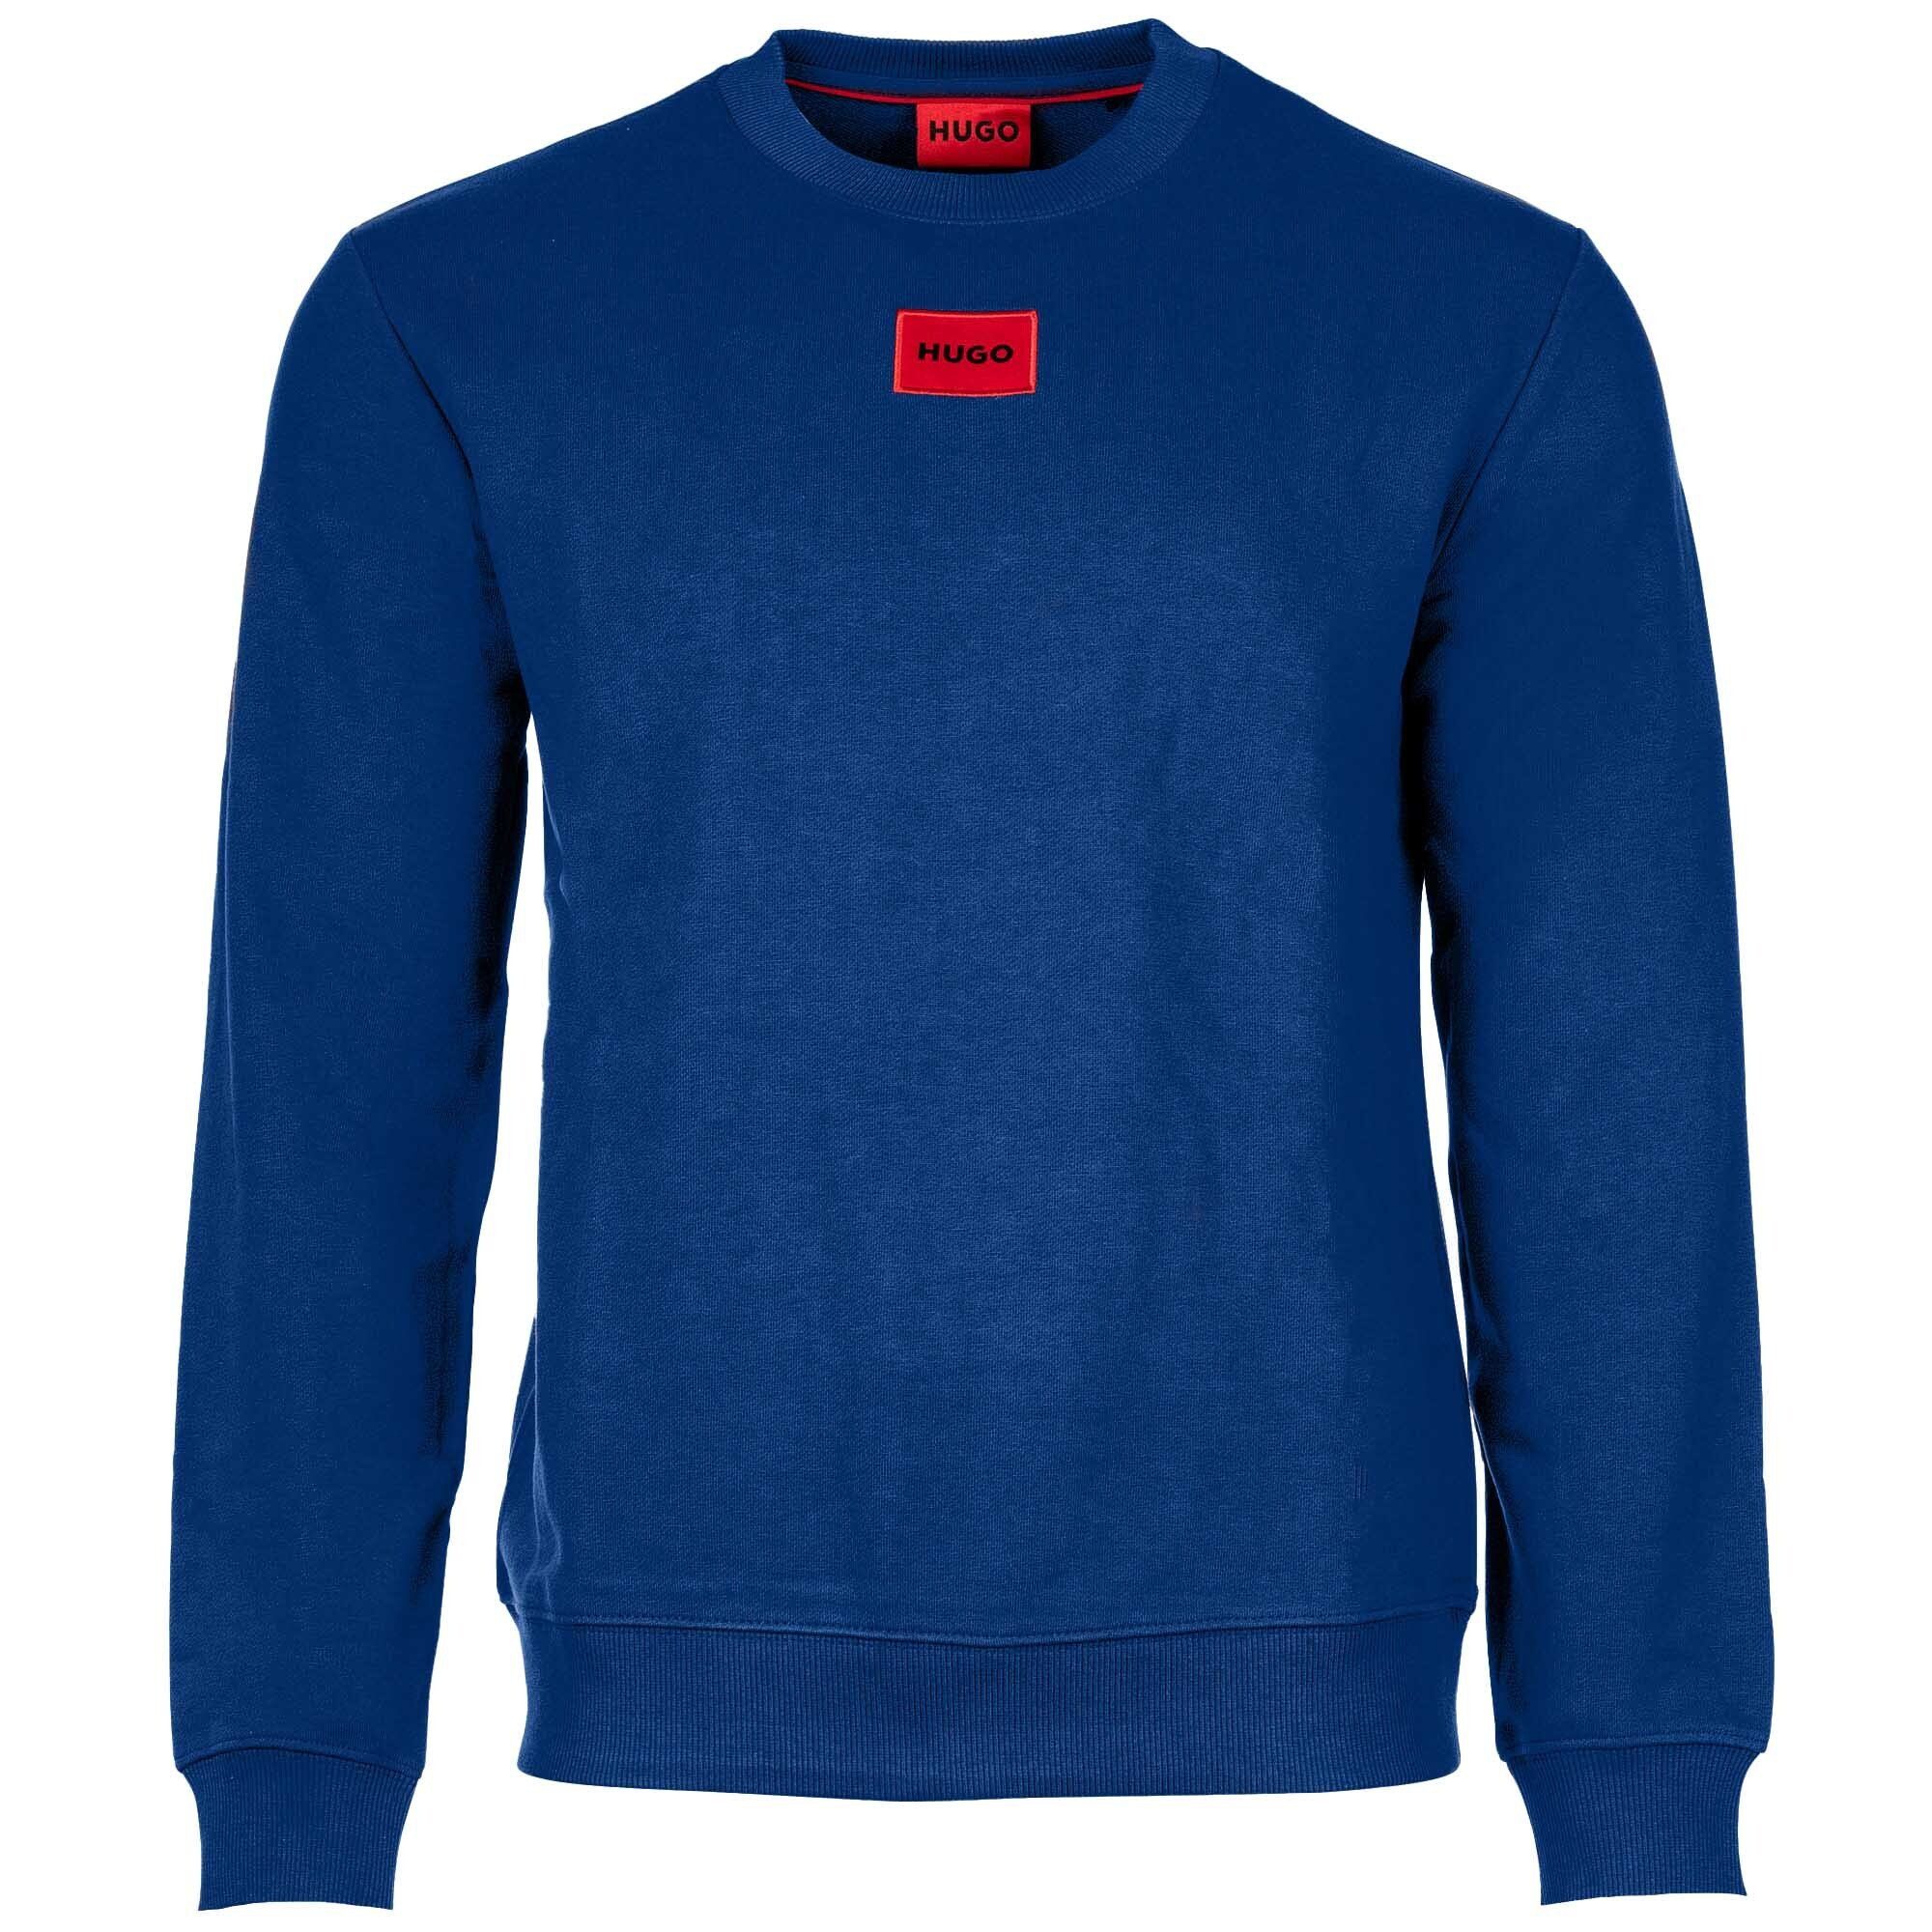 HUGO Sweatshirt Herren Sweater, Diragol212 - Sweatshirt, Rundhals Mittelblau